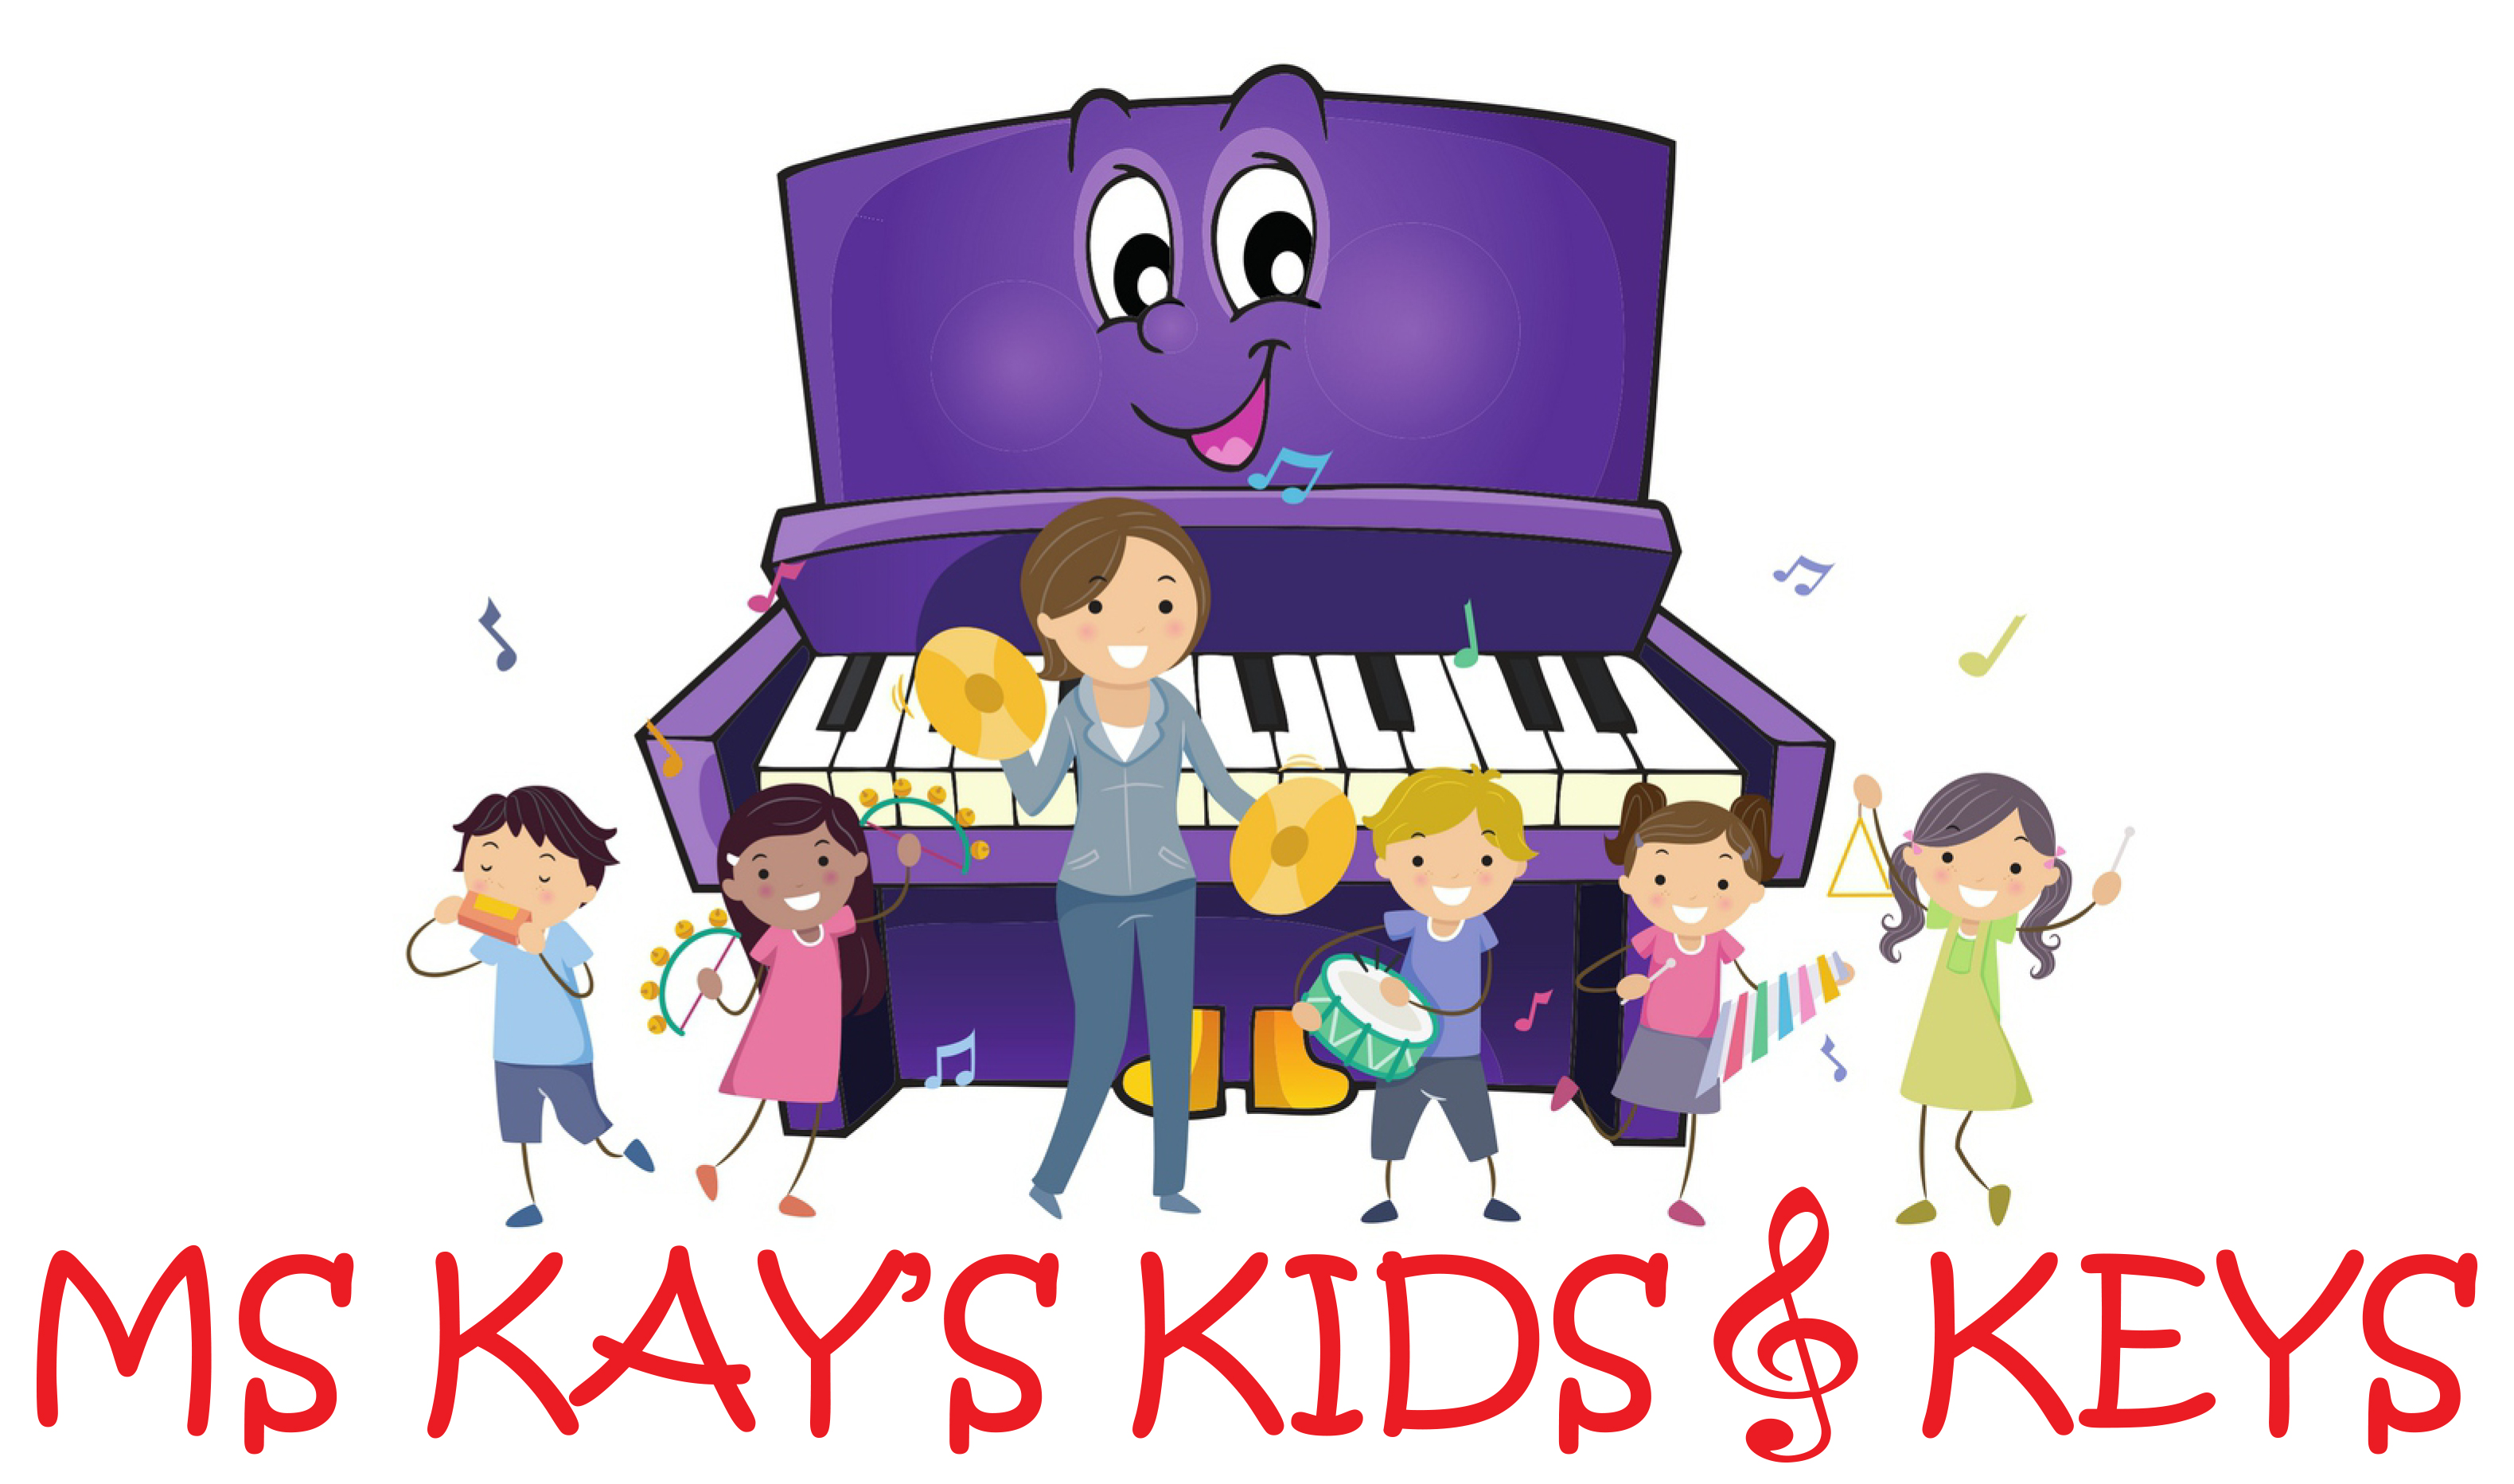 Ms. Kay's Kids & Keys